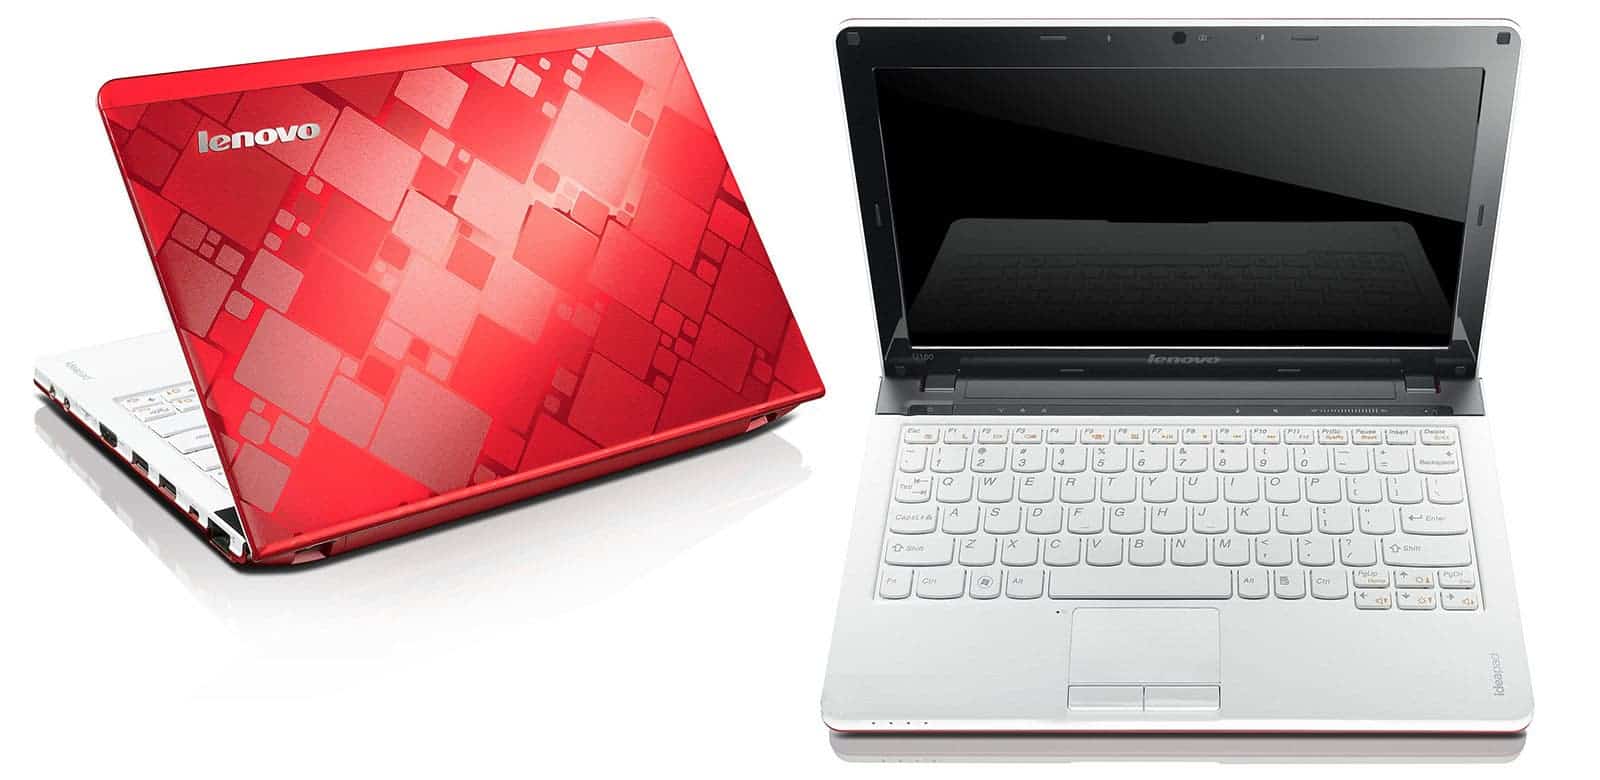 The Z-Series Laptops